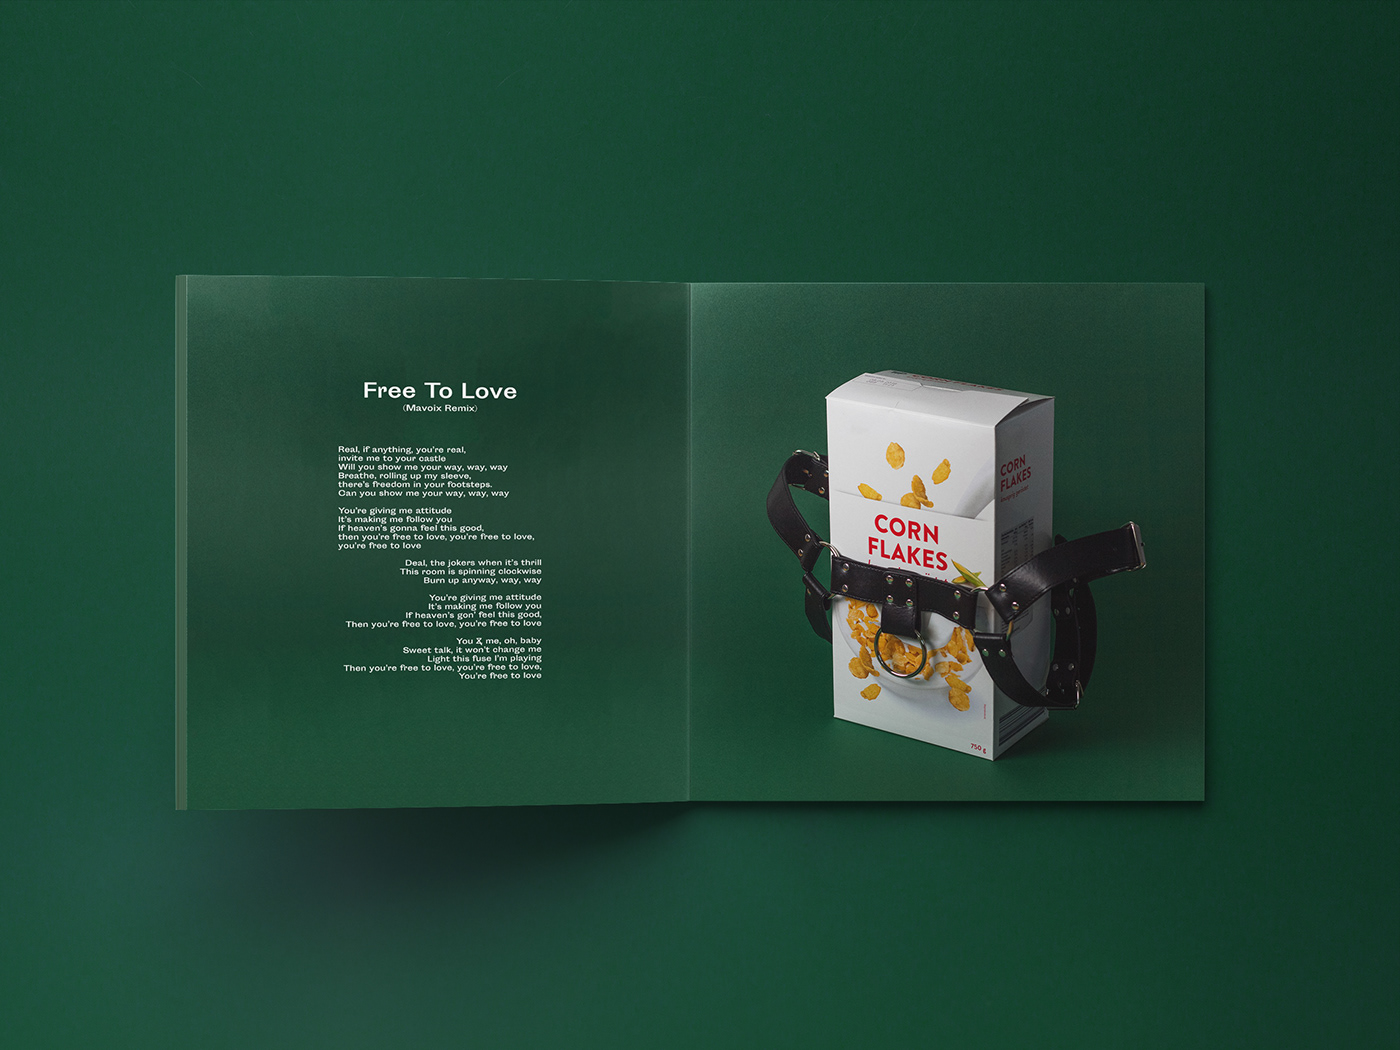 funbang1 album cover graphic design  brendan maclean gay bdsm Photography  Weissensee music pop